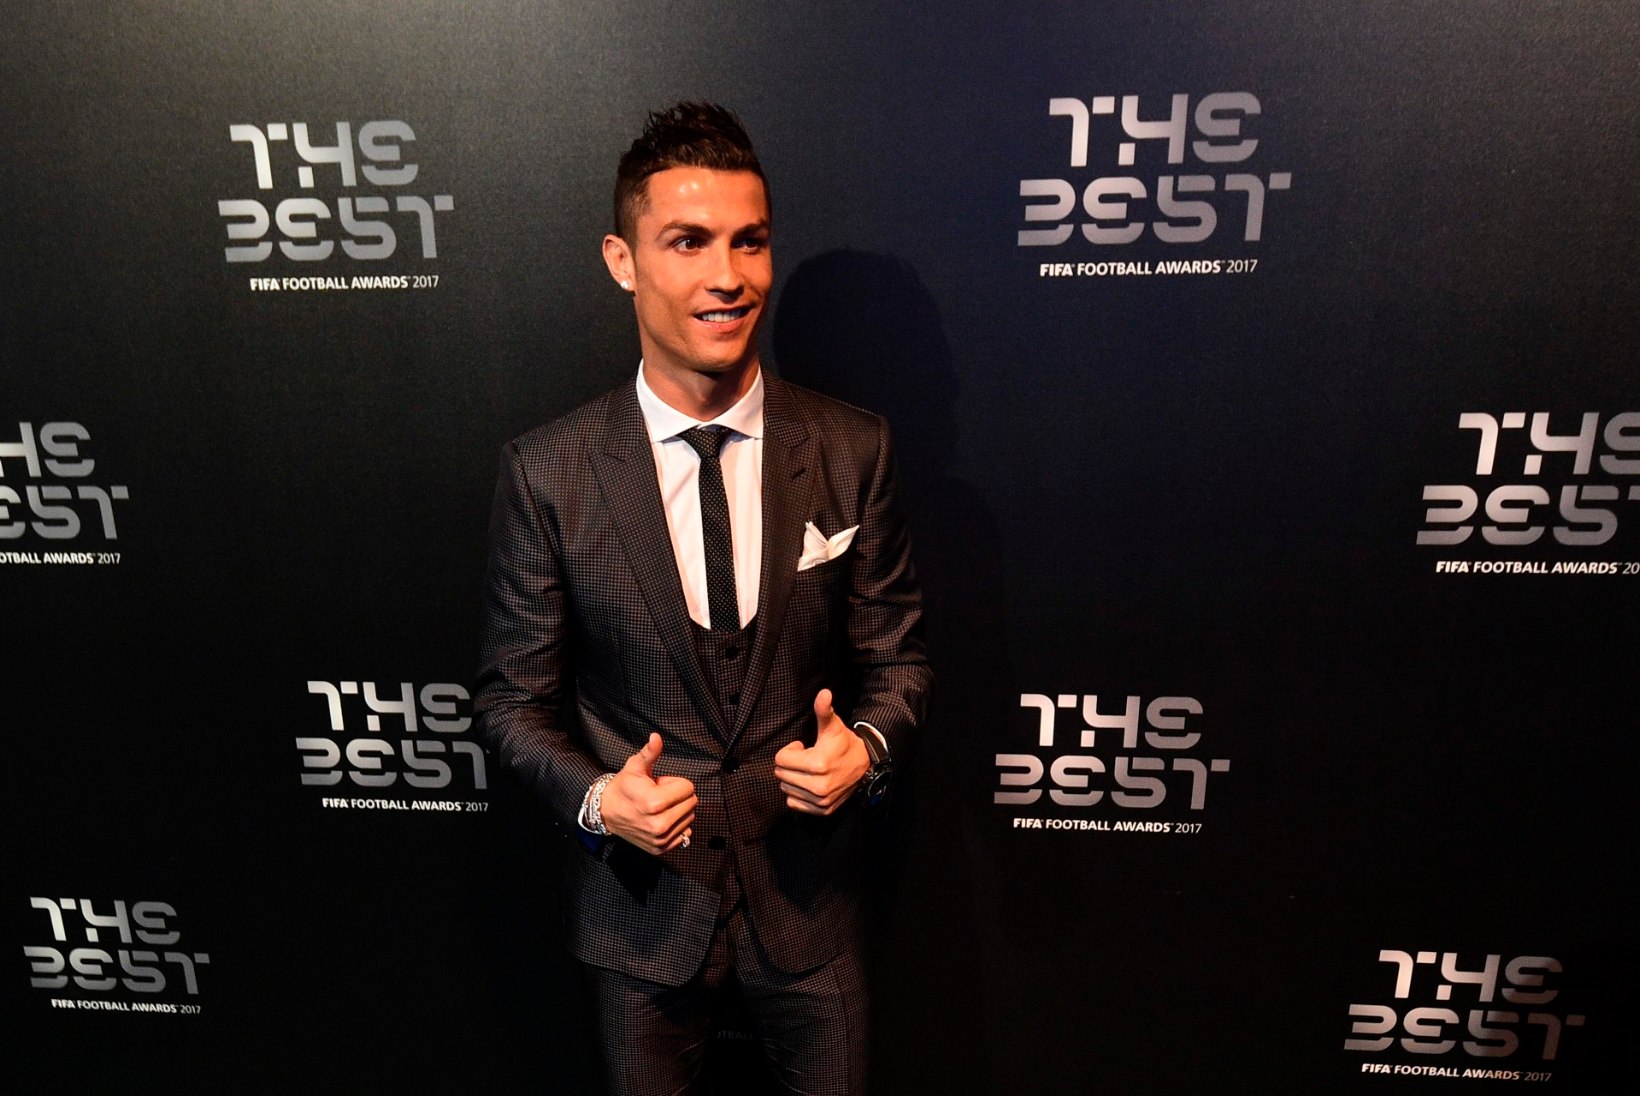 FIFA valis aasta parimaks jalgpalluriks Cristiano Ronaldo